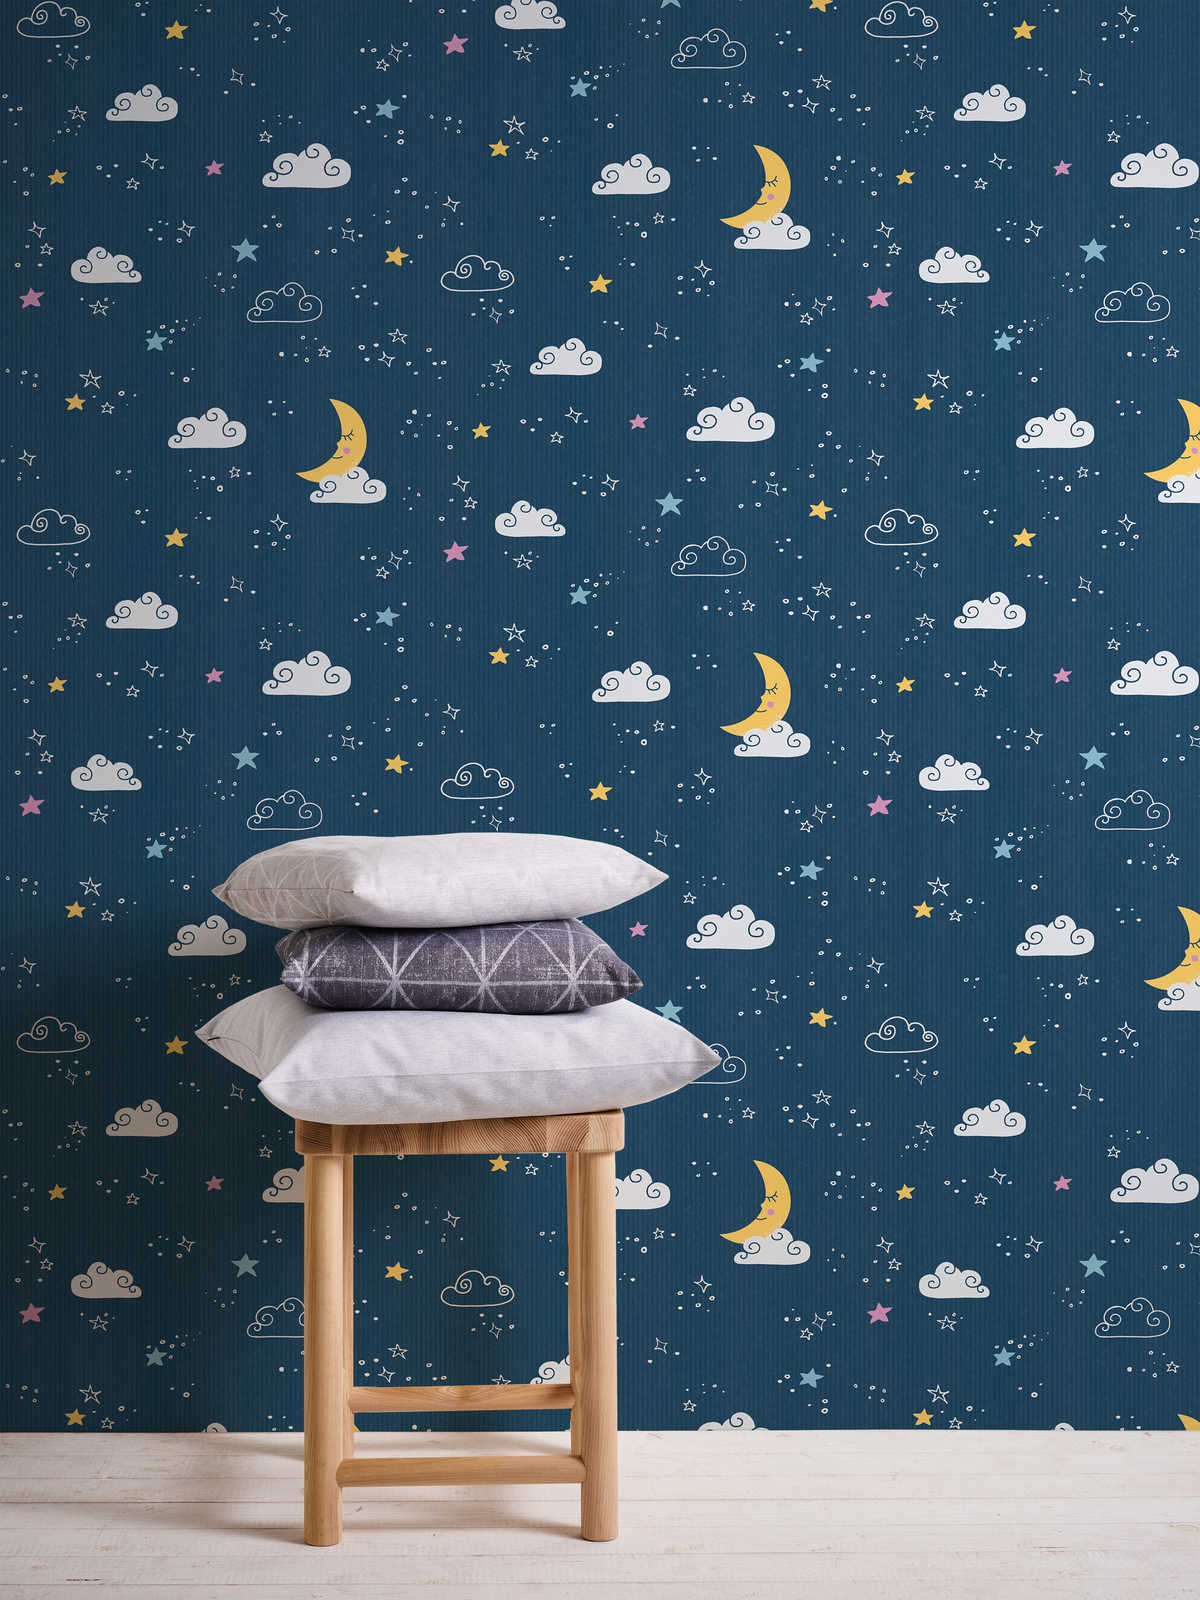             Nursery wallpaper night sky - blue, white, yellow
        